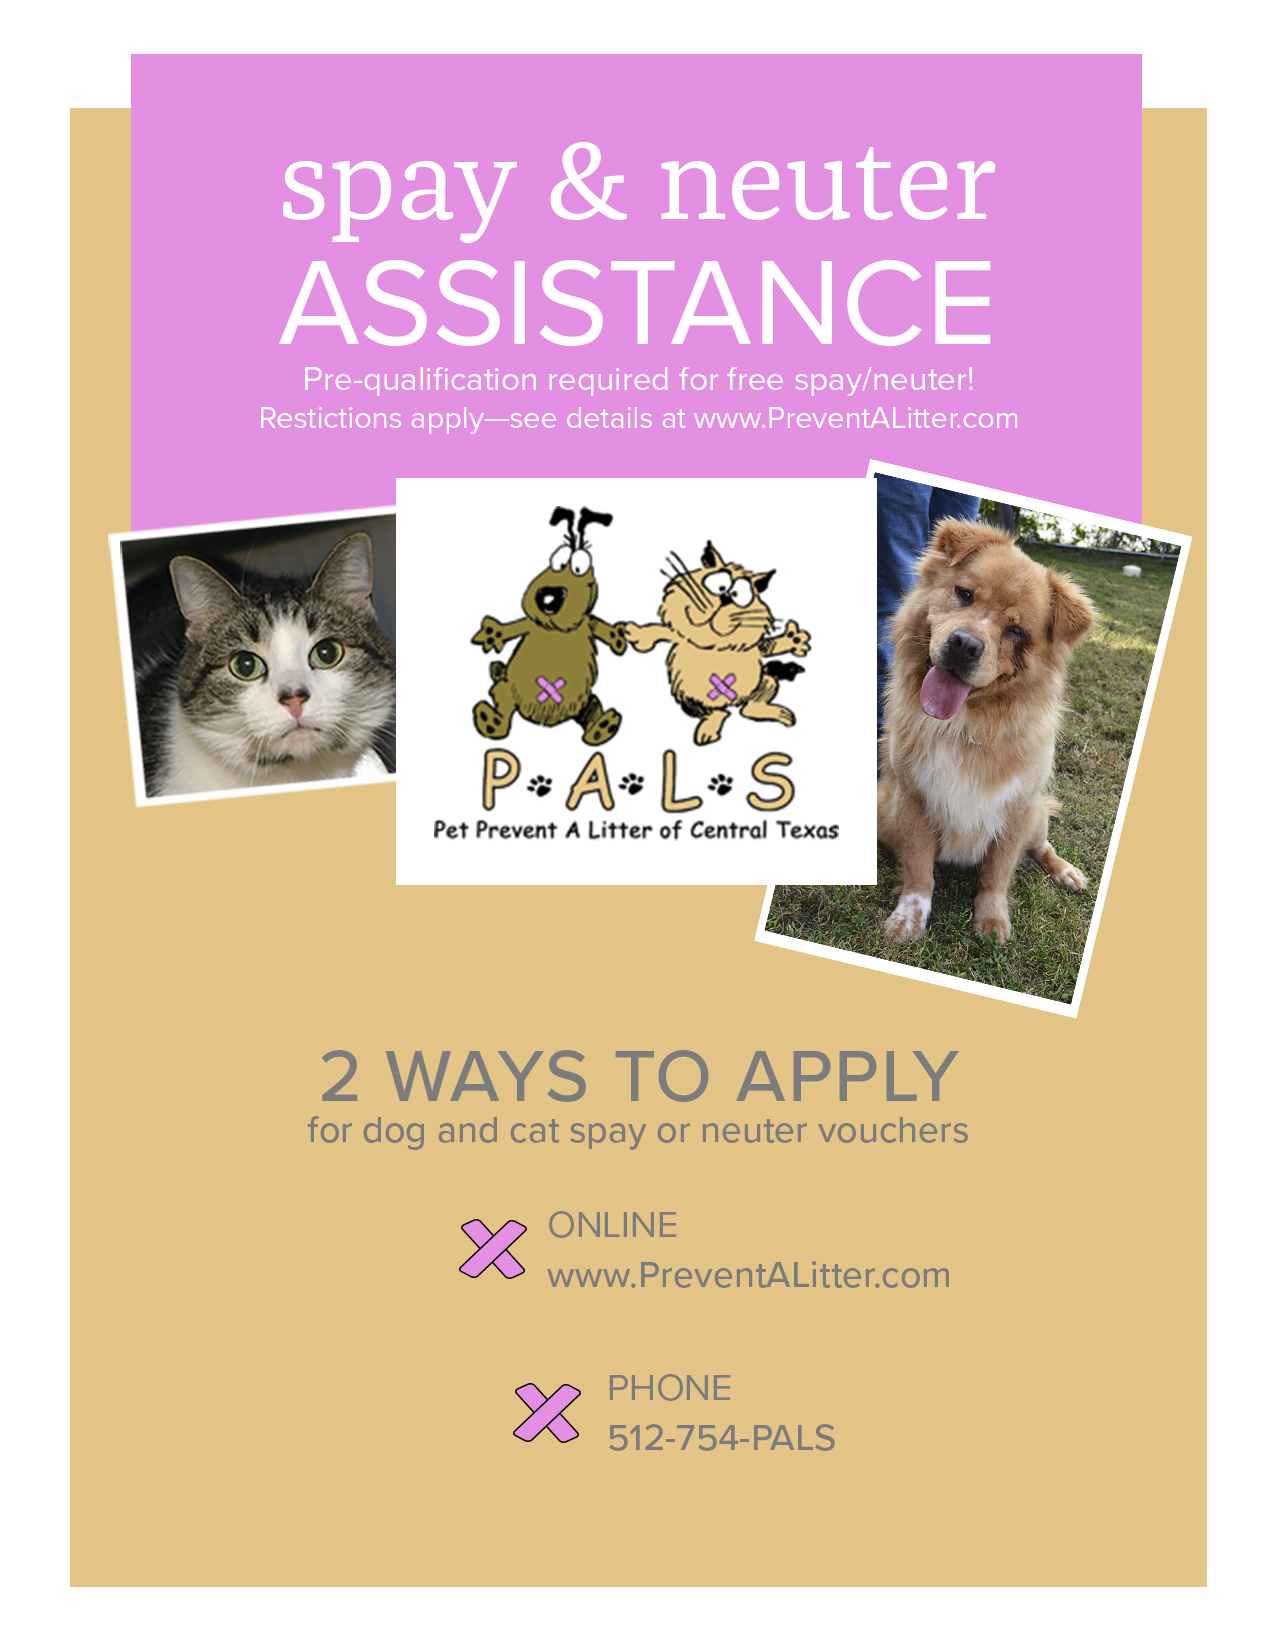 Spay & Neuter Resources Pet Prevent a Litter (PALS) of Central Texas